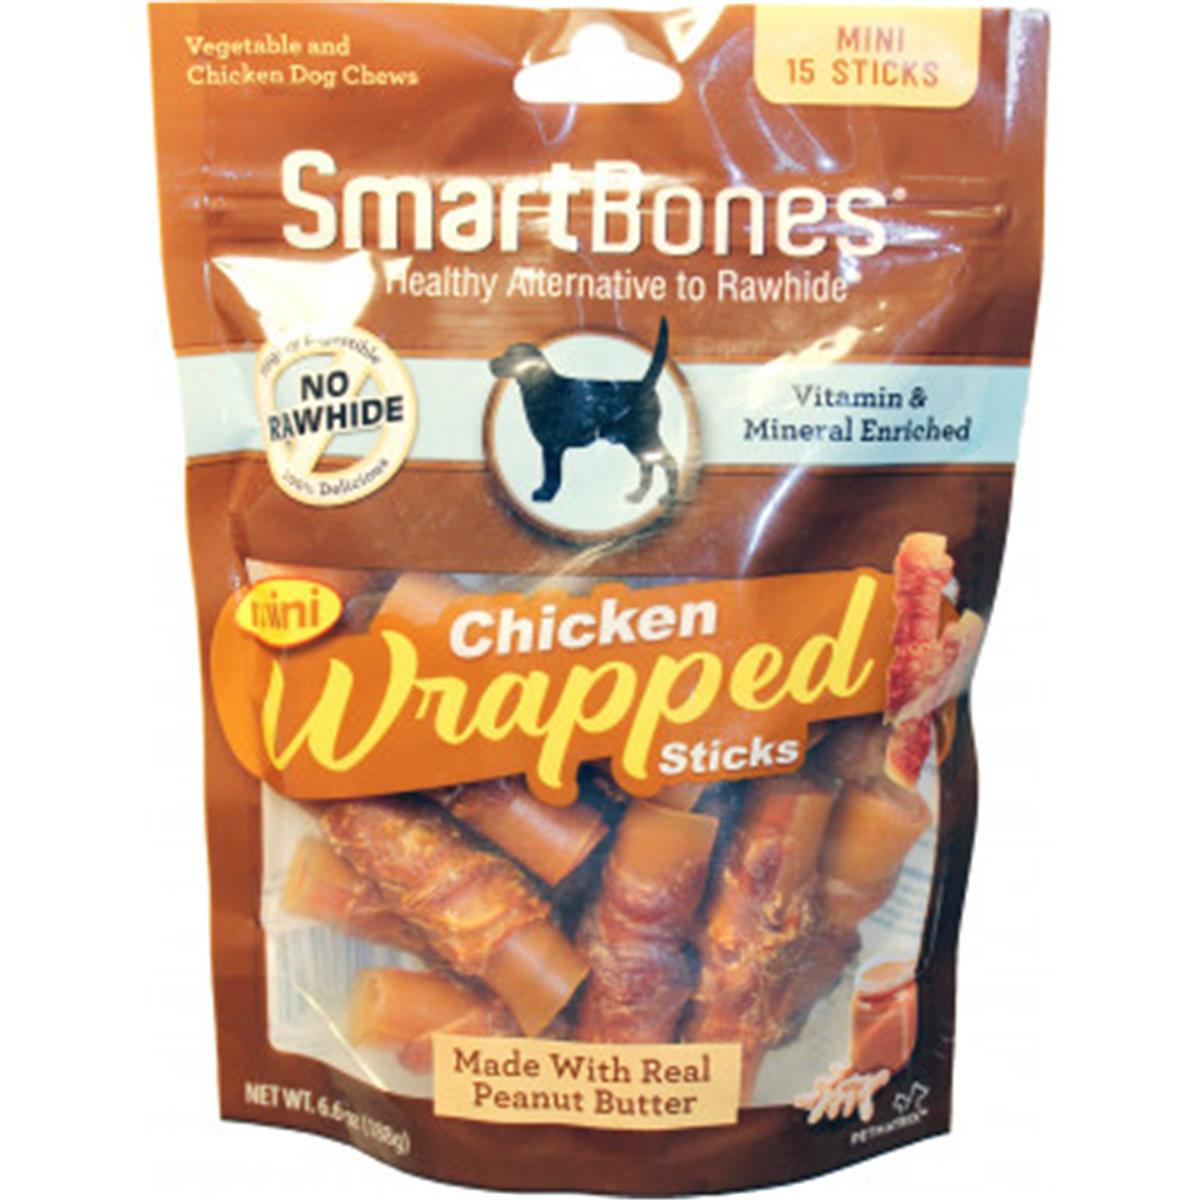 Sbcw-02959 Smartbones Chicken Wrapped Mini Sticks